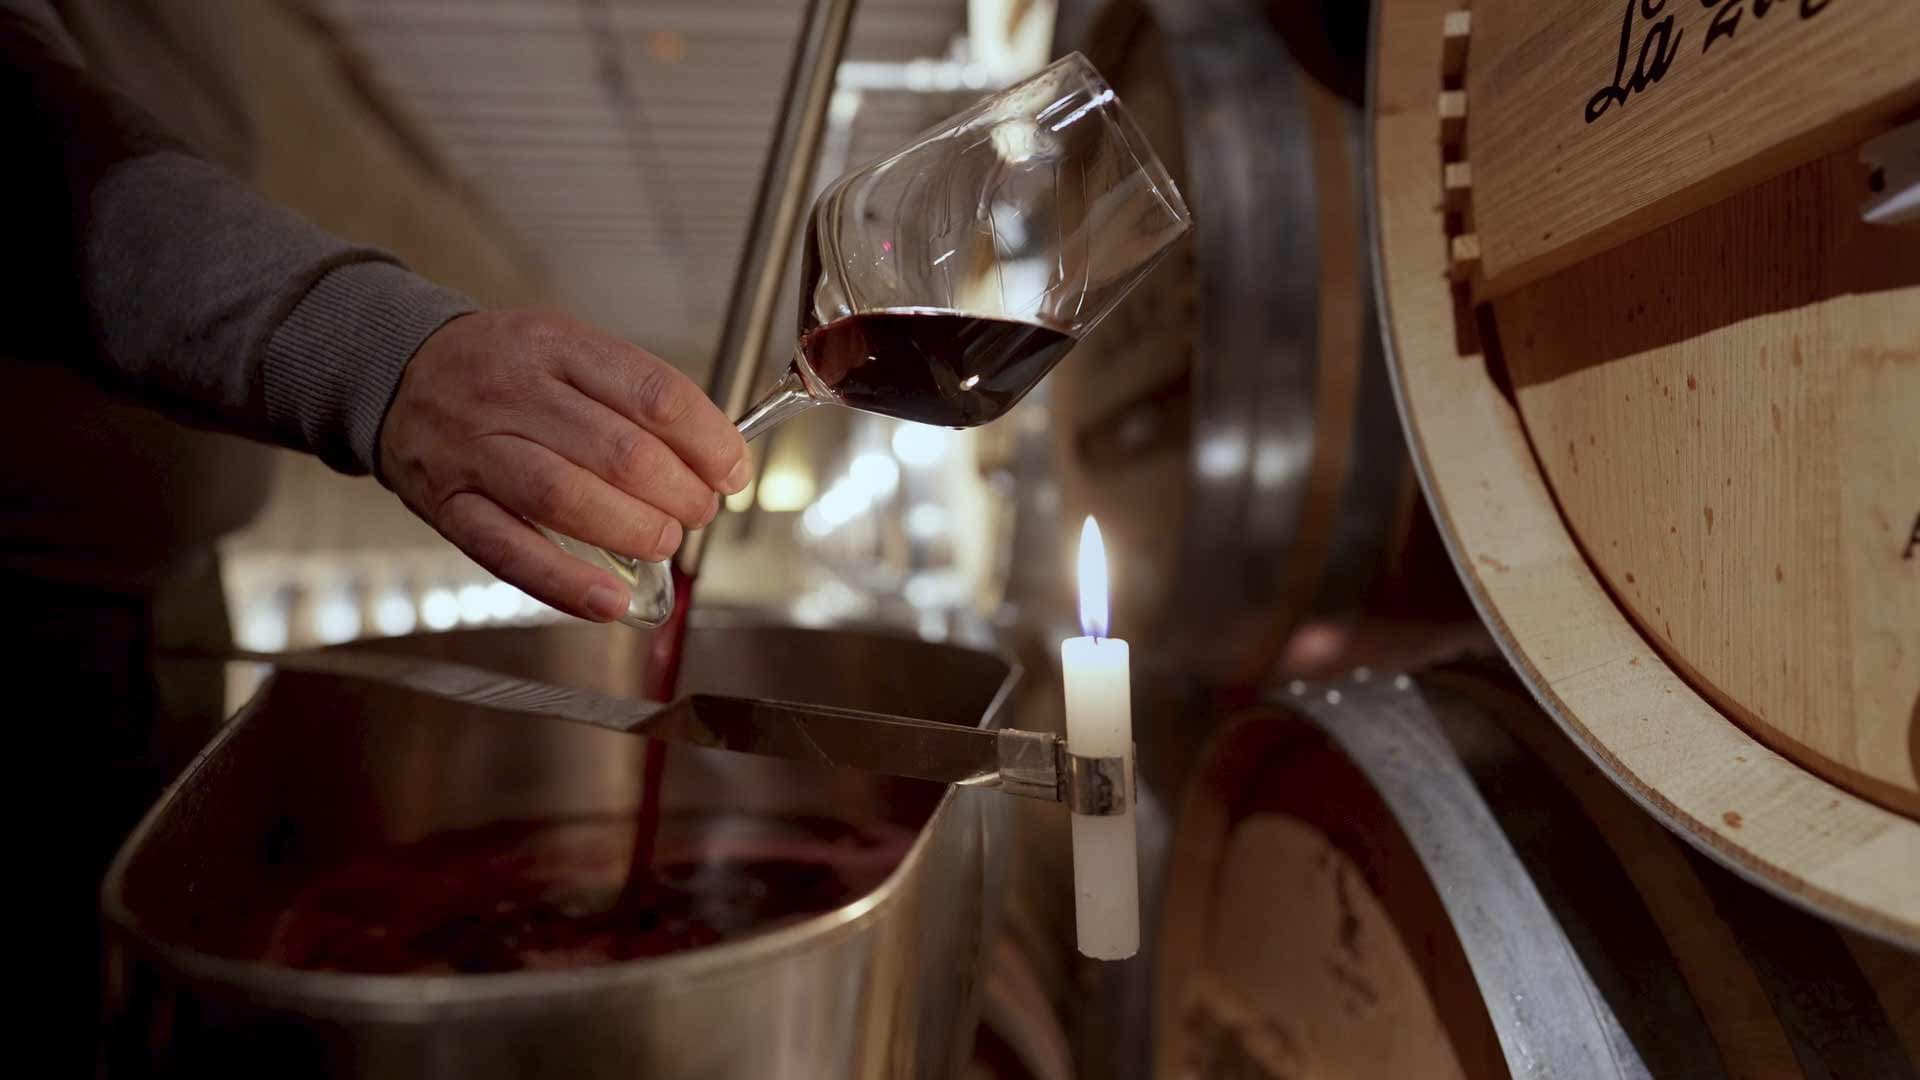 Rioja, la tierra de los mil vinos